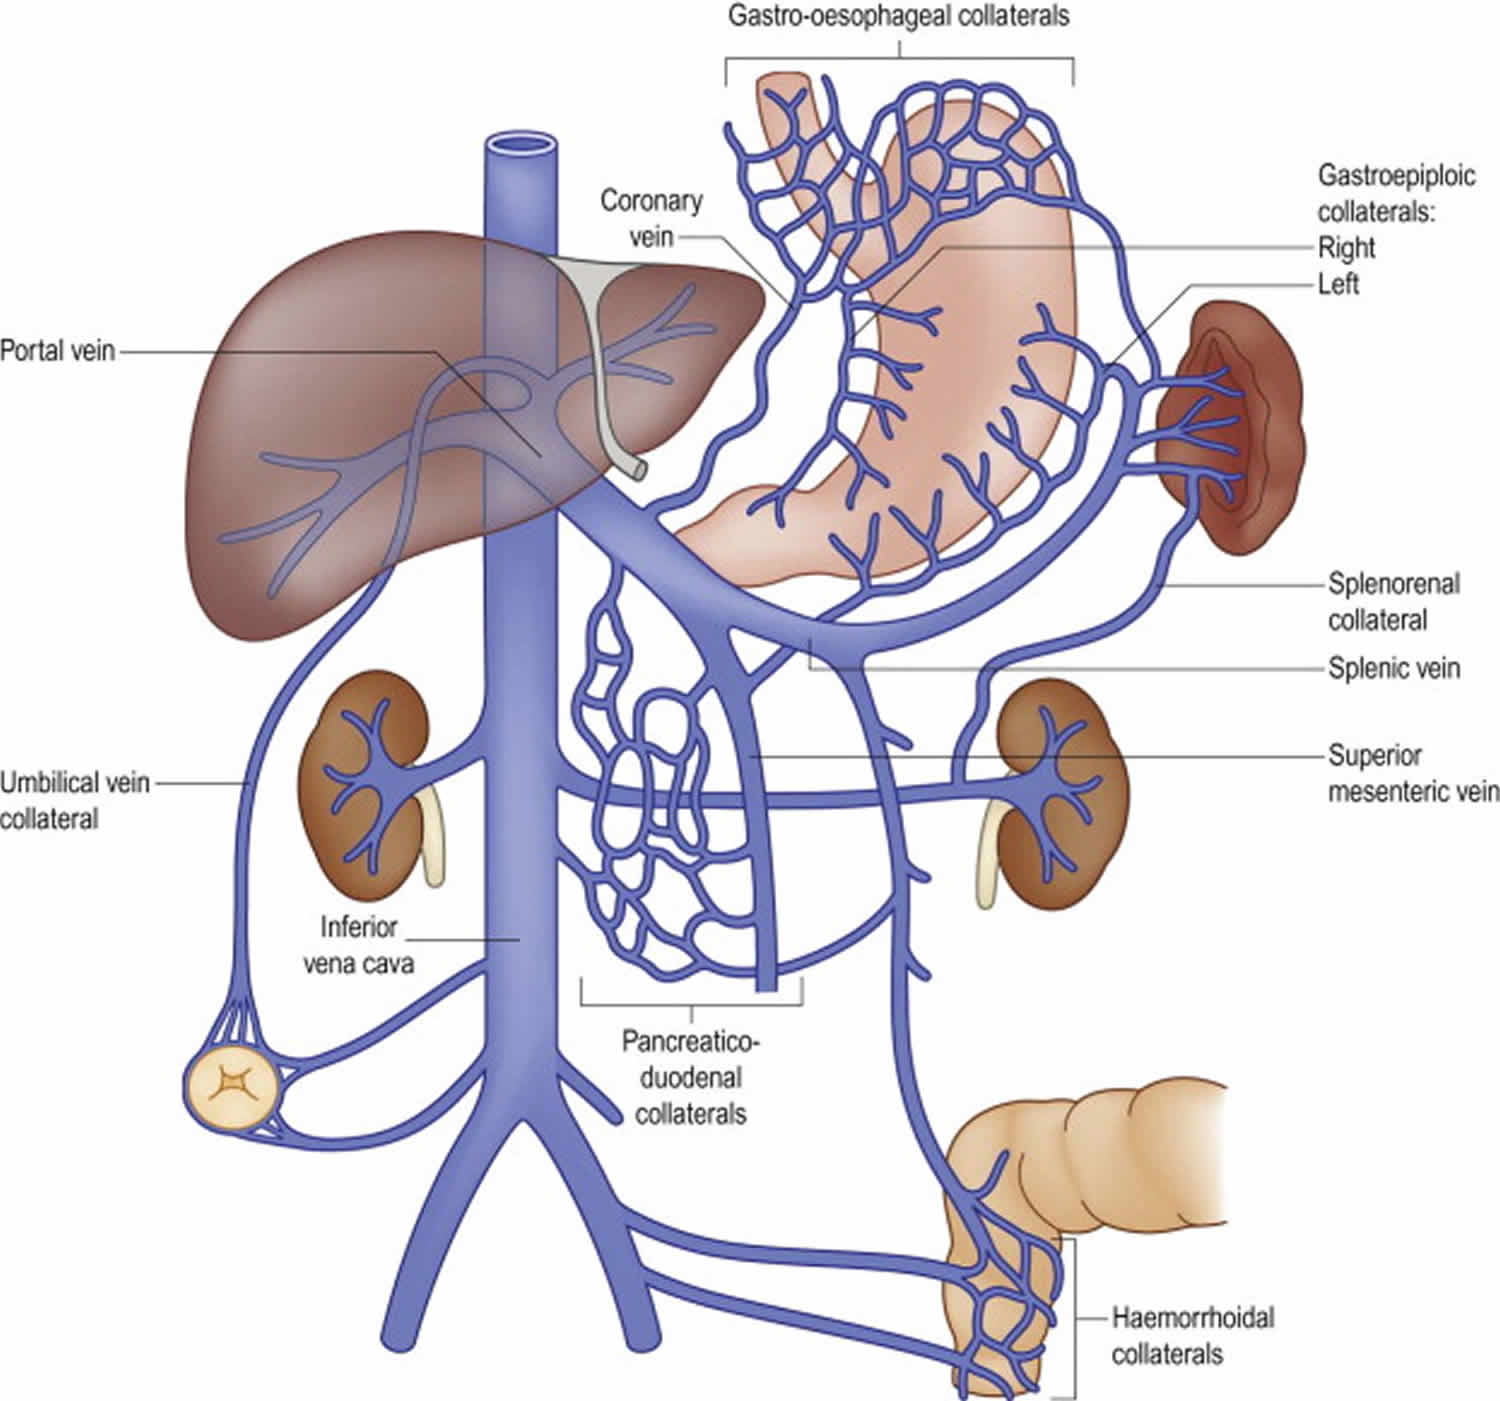 Portal vein anatomy, function, embolization, thrombosis & hypertension